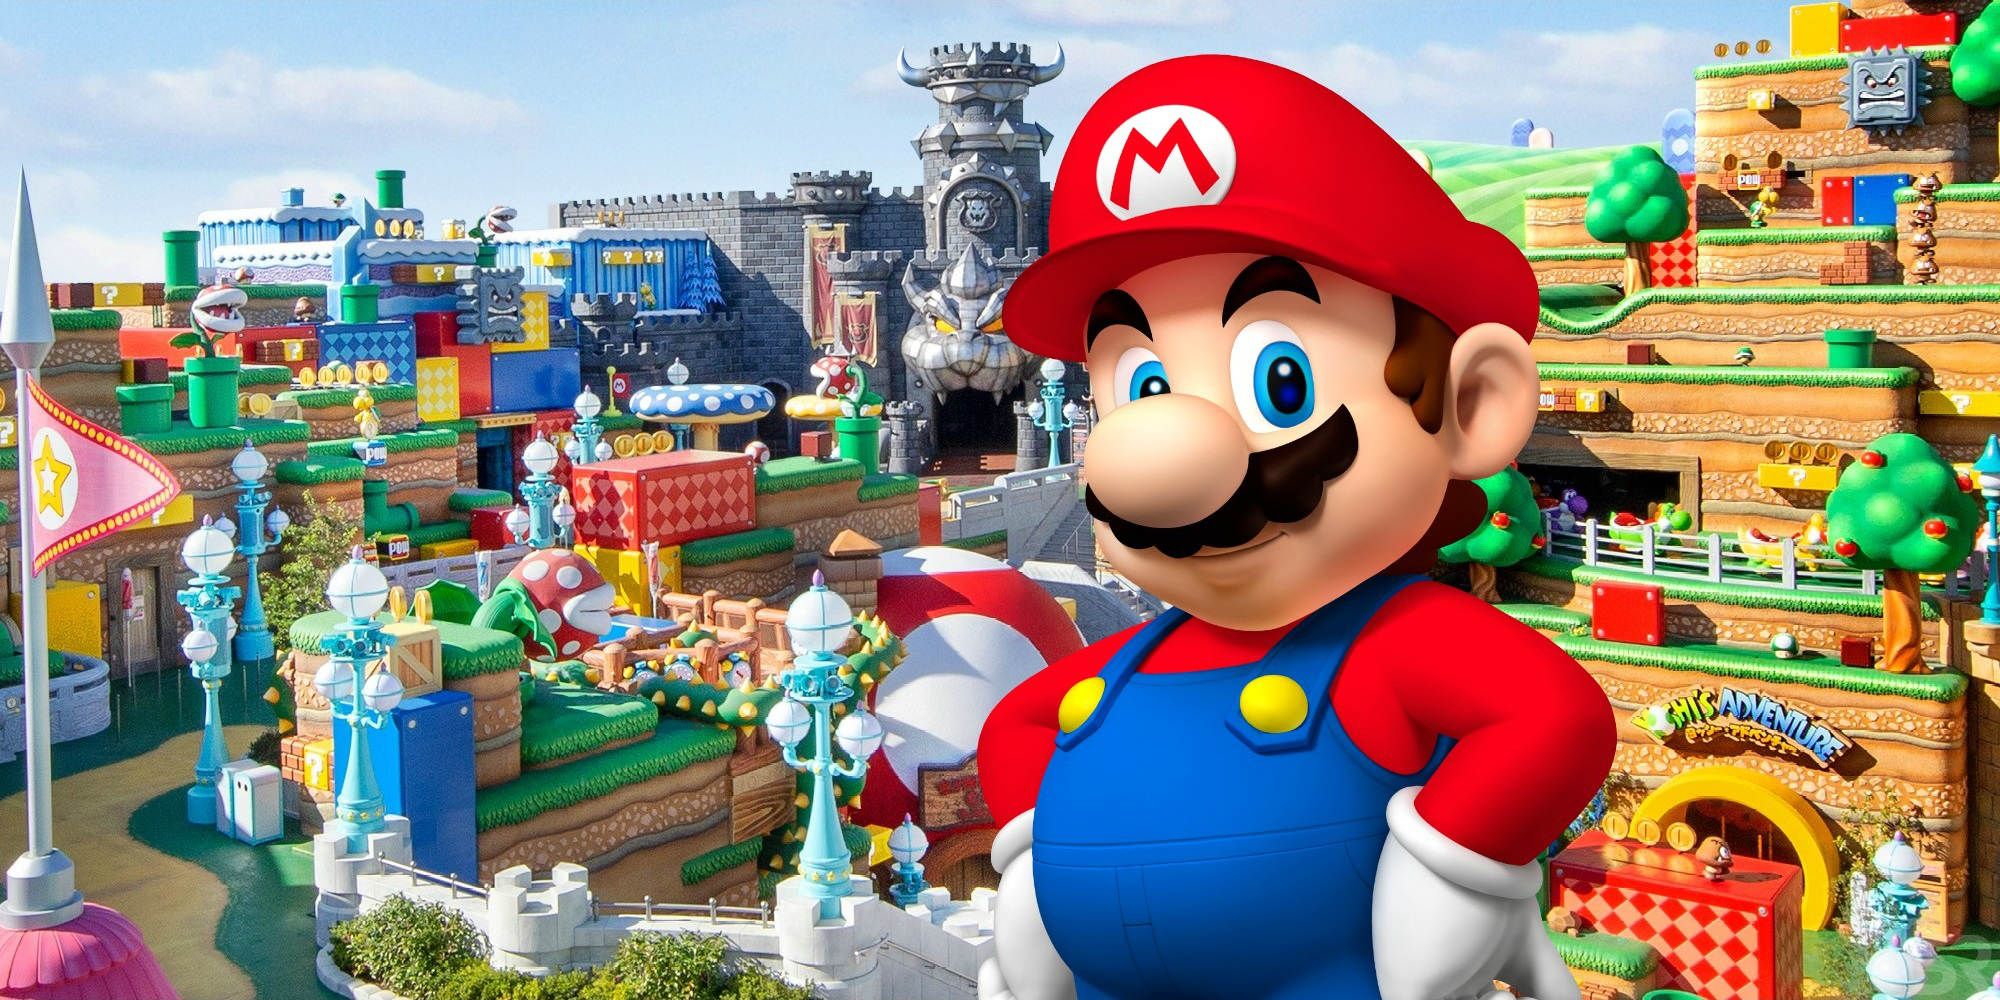 Super Nintendo World opens in Japan February 4